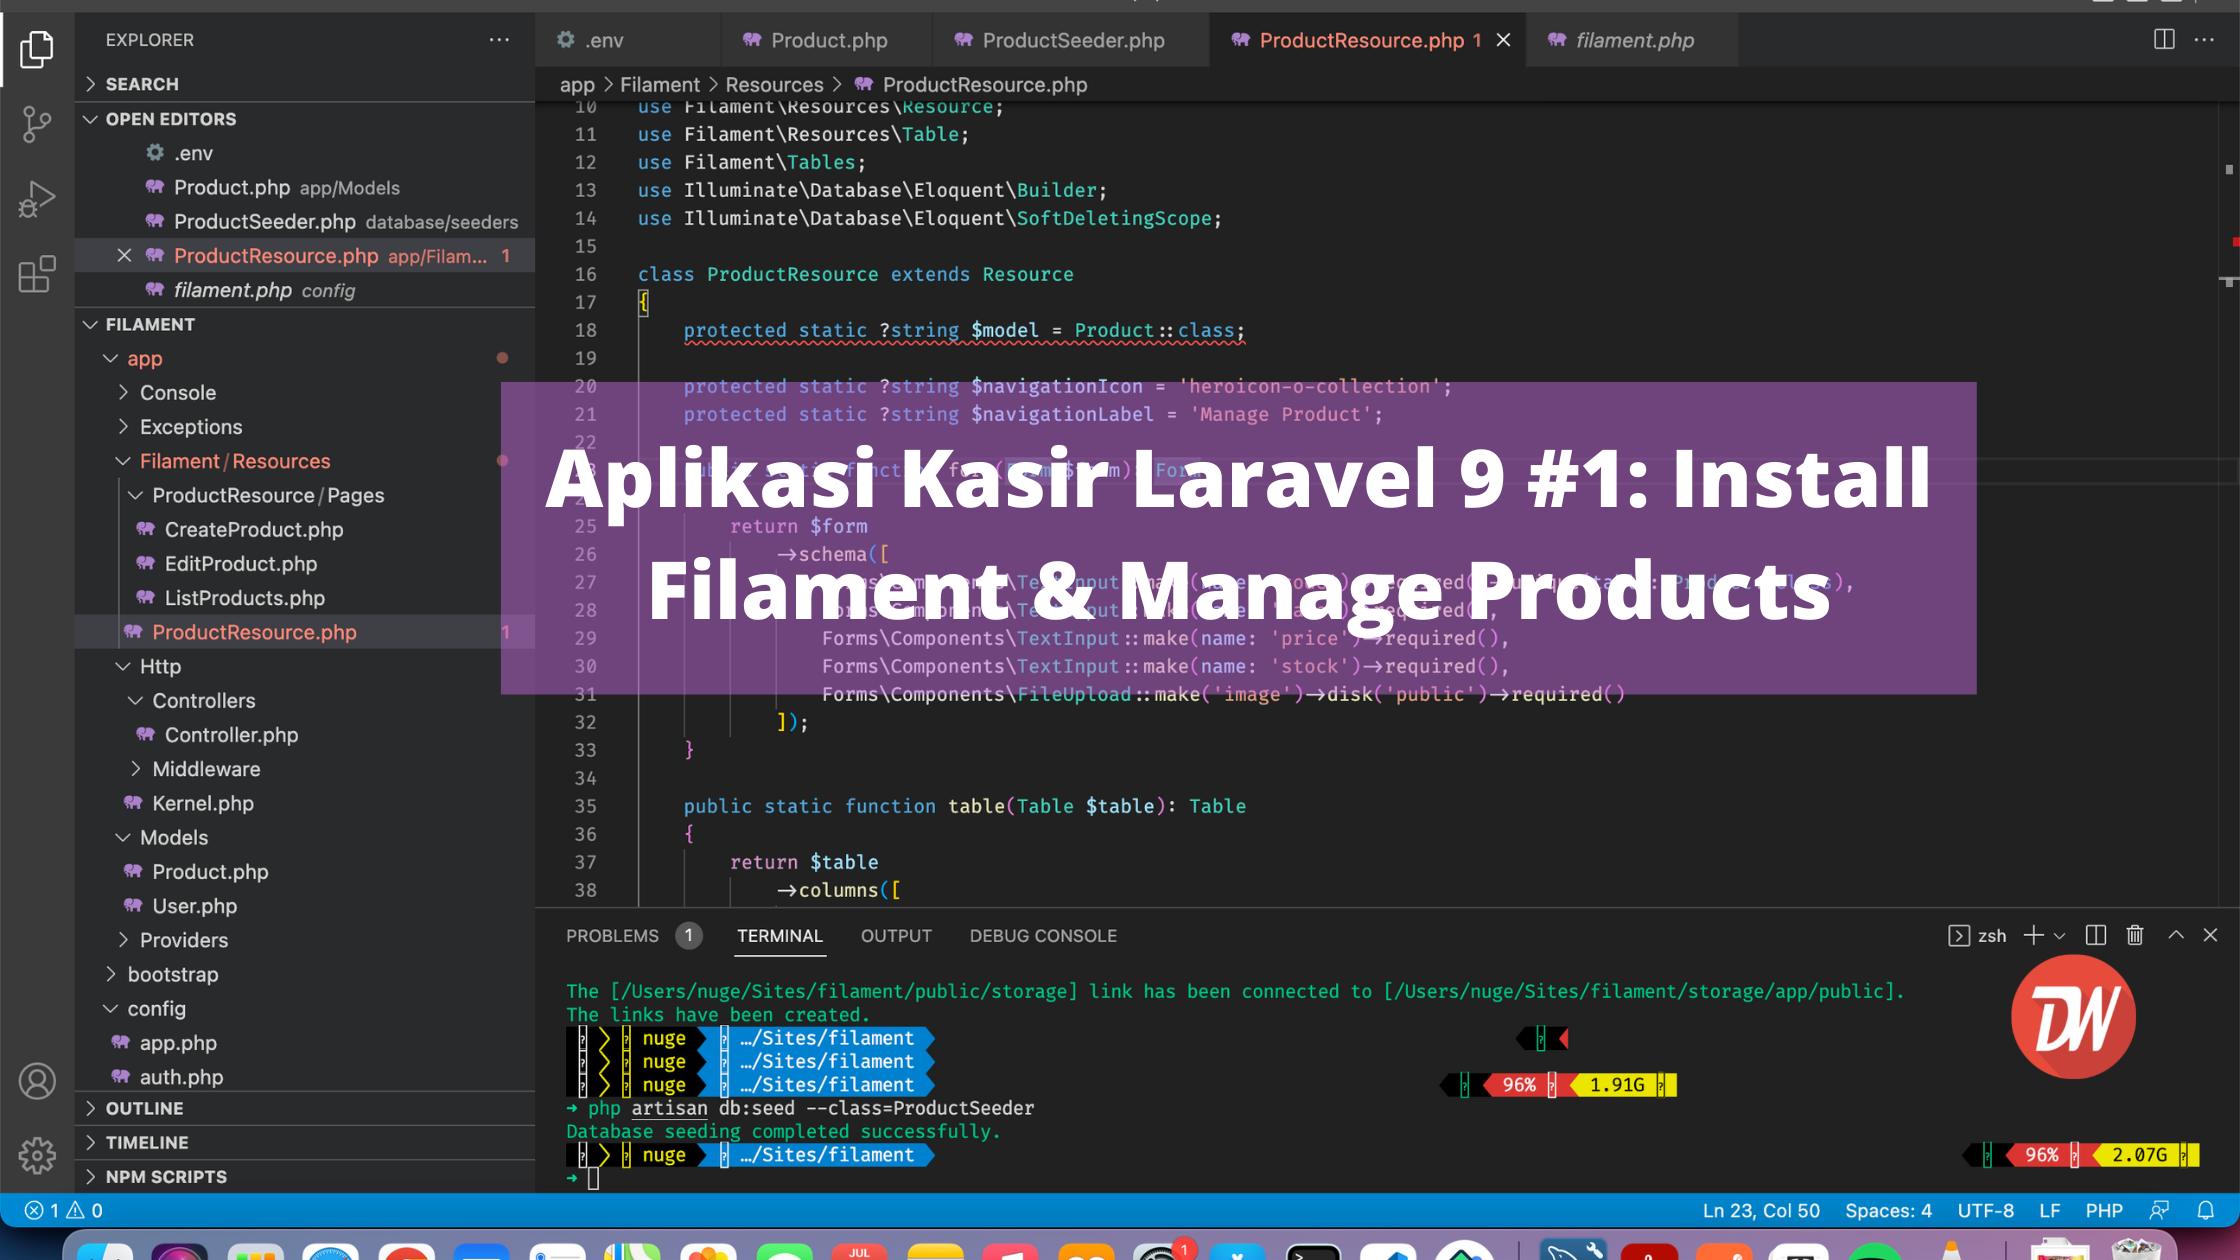 Aplikasi Kasir Laravel 9 #1: Install Filament & Manage Products